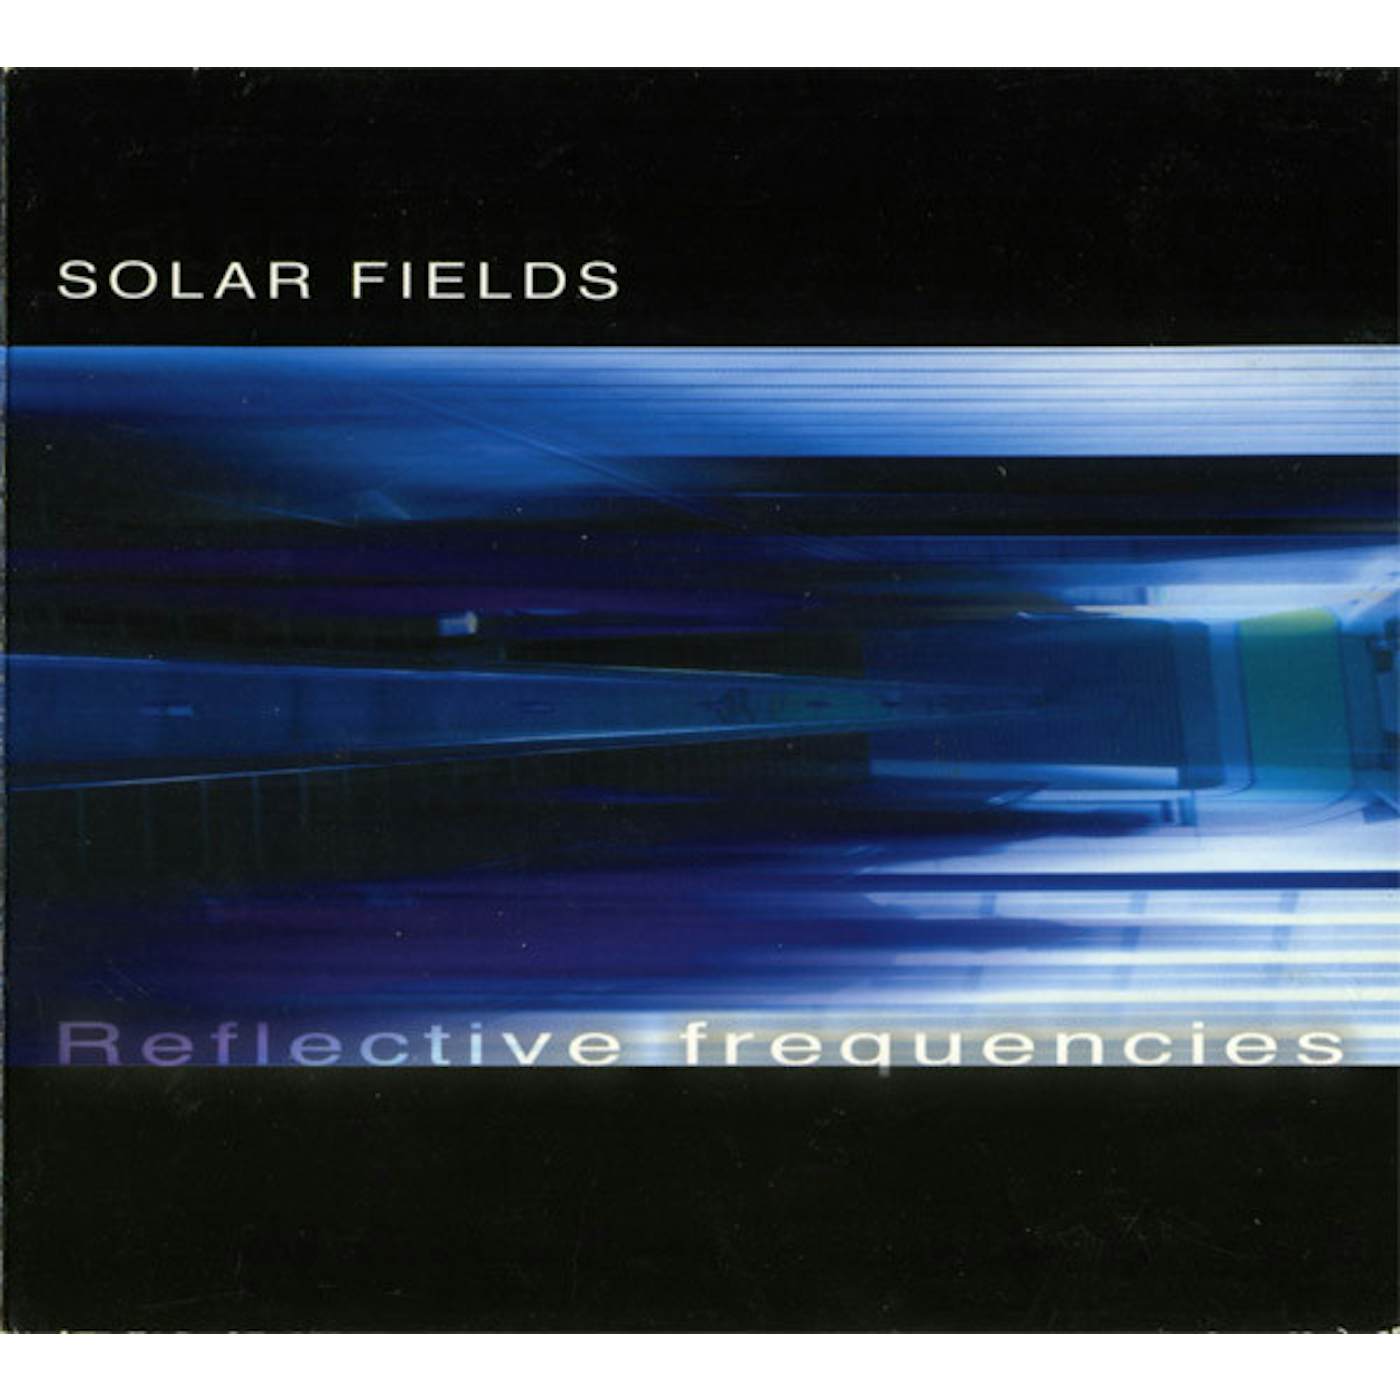 Solar Fields Reflective Frequencies Vinyl Record